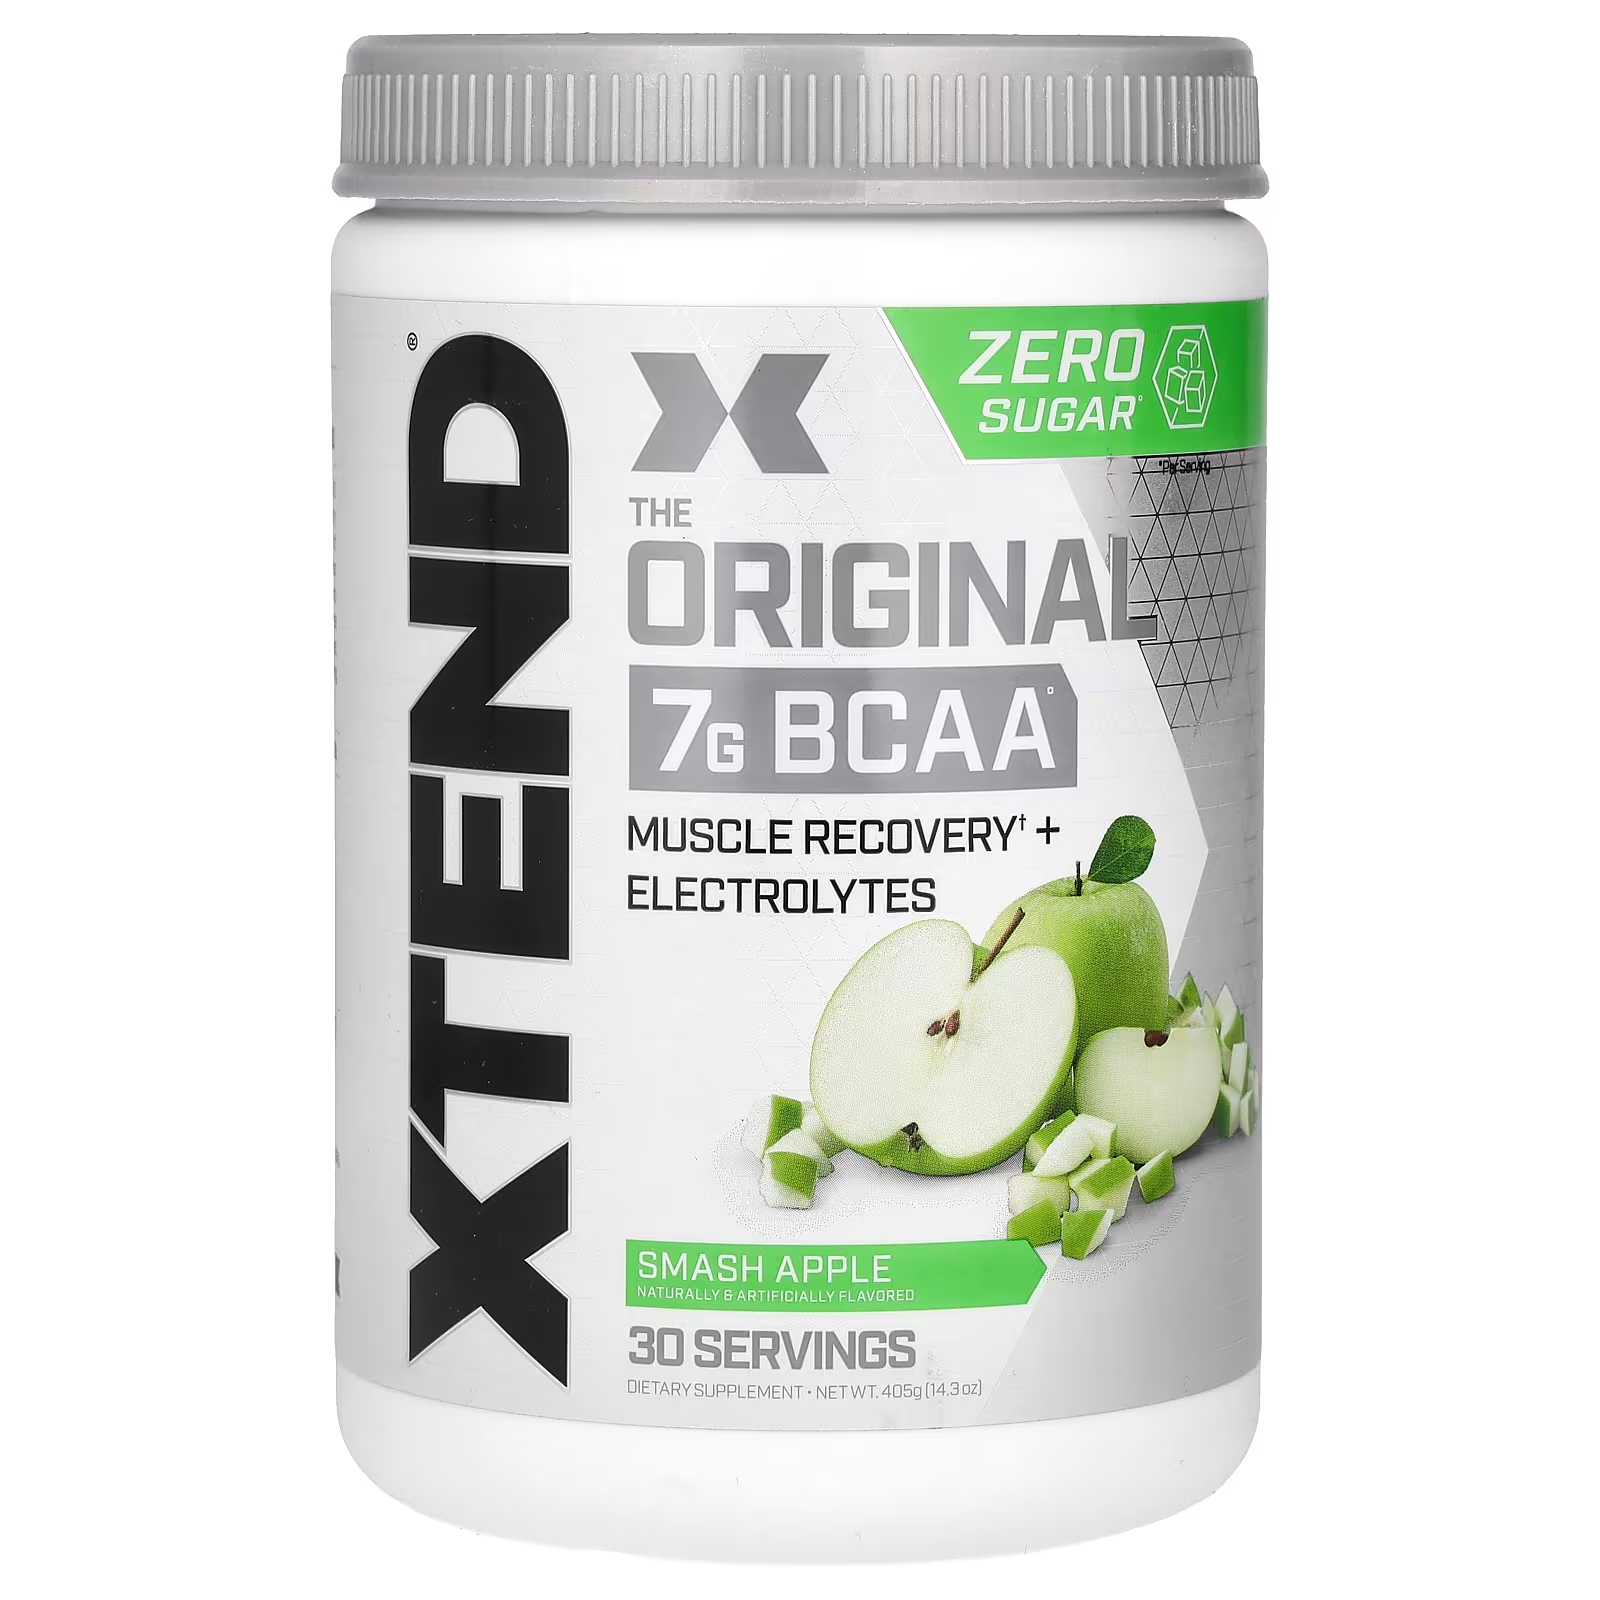 Пищевая добавка Xtend The Original 7G BCAA Smash Apple, 405 г пищевая добавка dream water original sleep powder snoozeberry